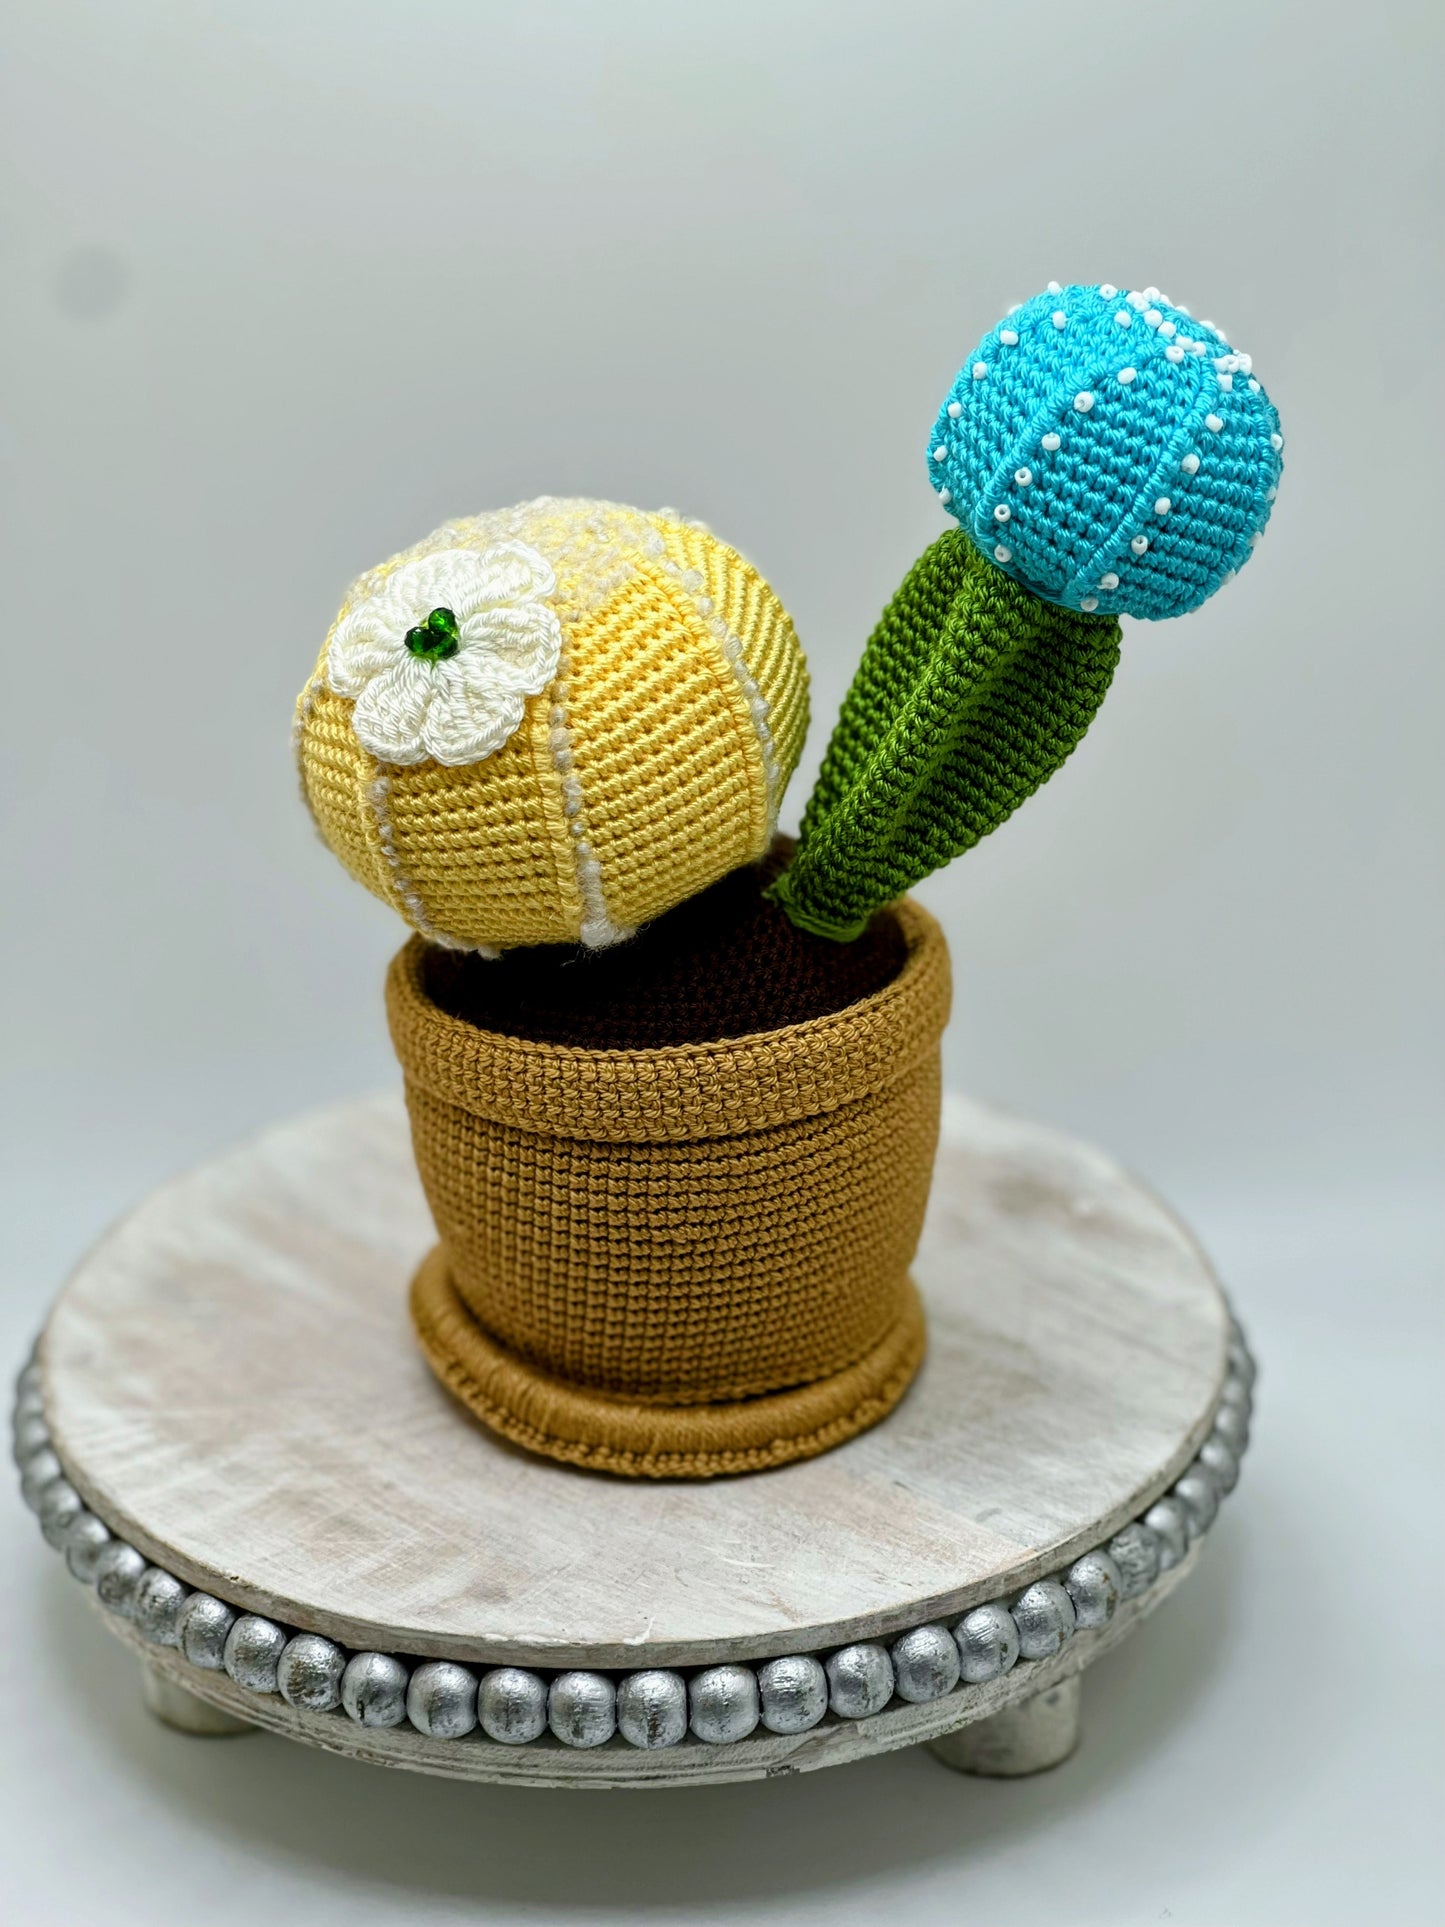 Stuffed Cactus 🌵 Toy - Crochet Knitted Amigurumi Toy